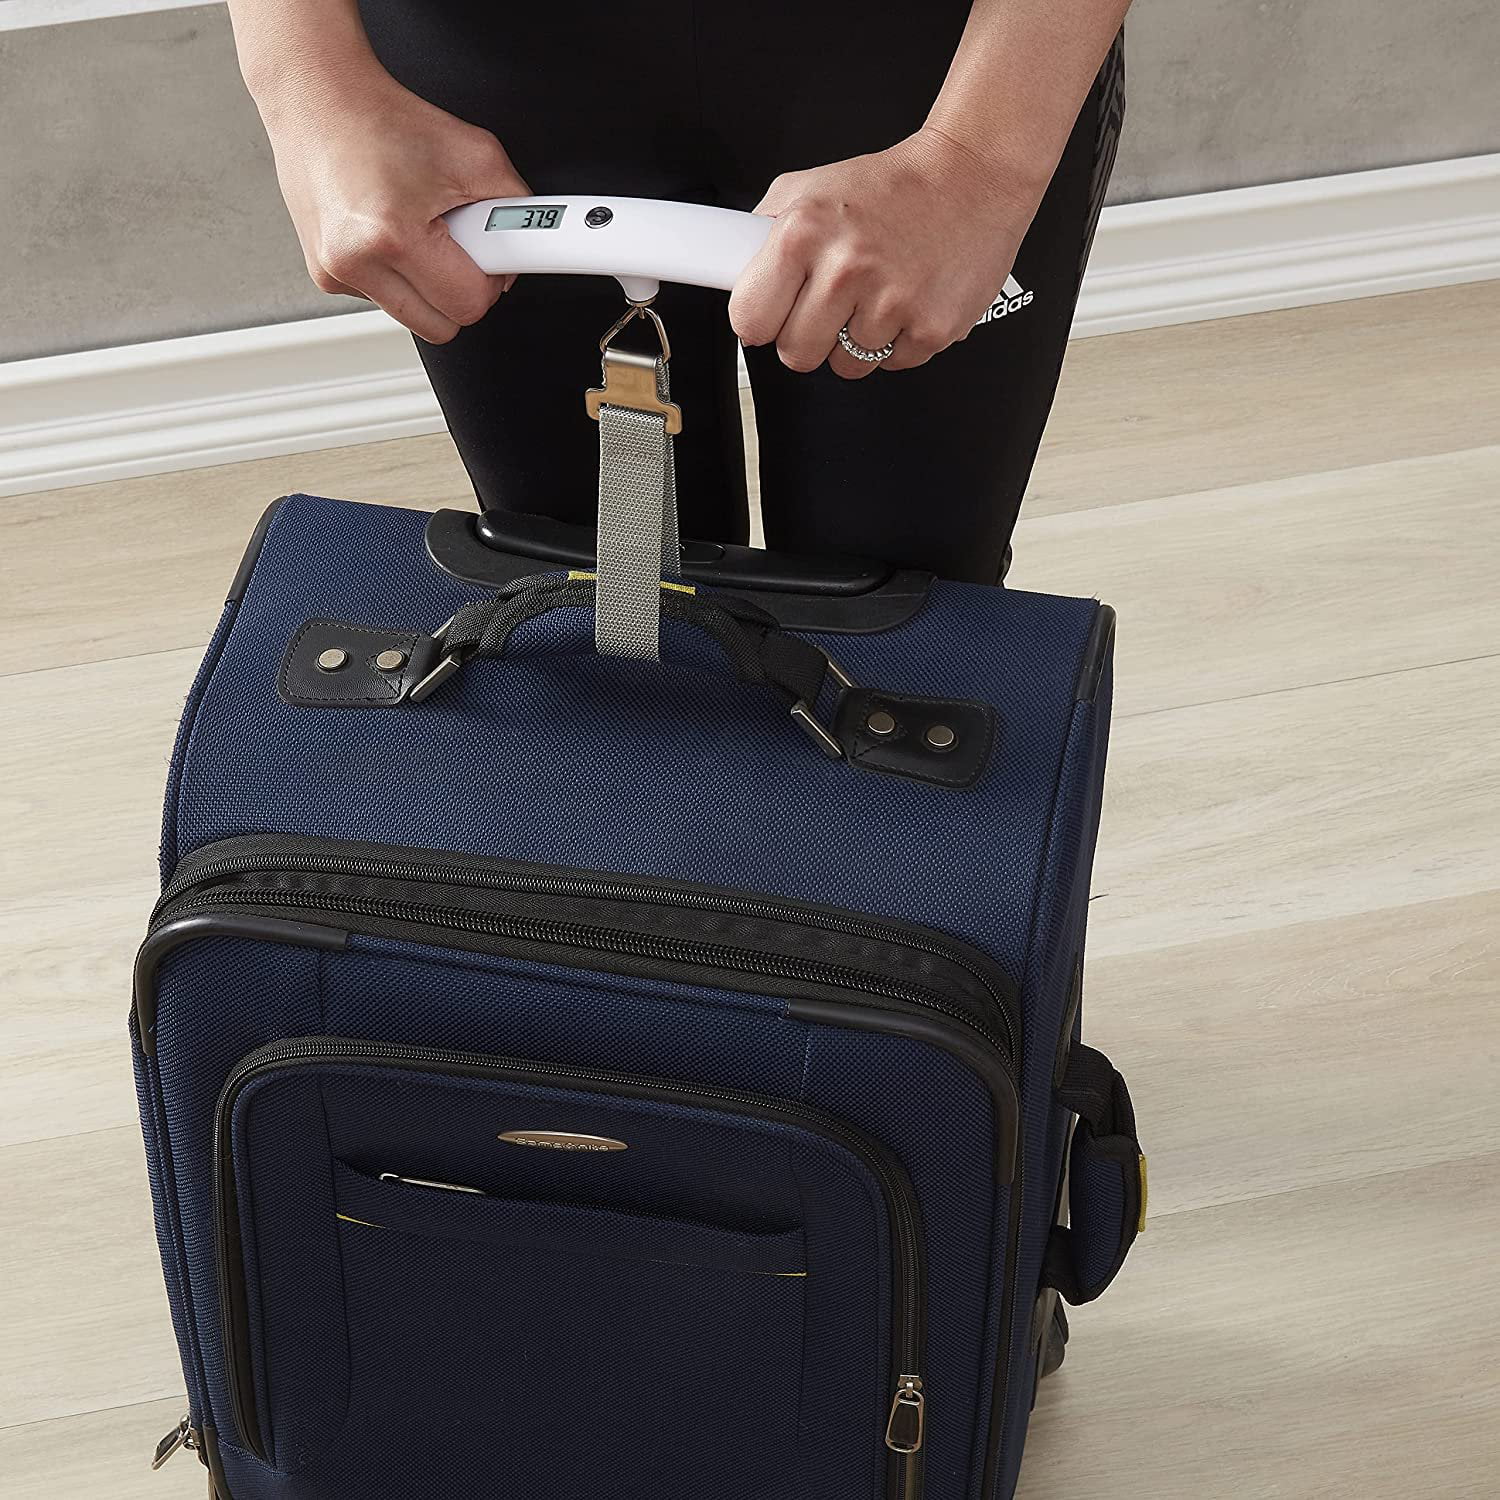 Digital Luggage Scale – pertuttistore